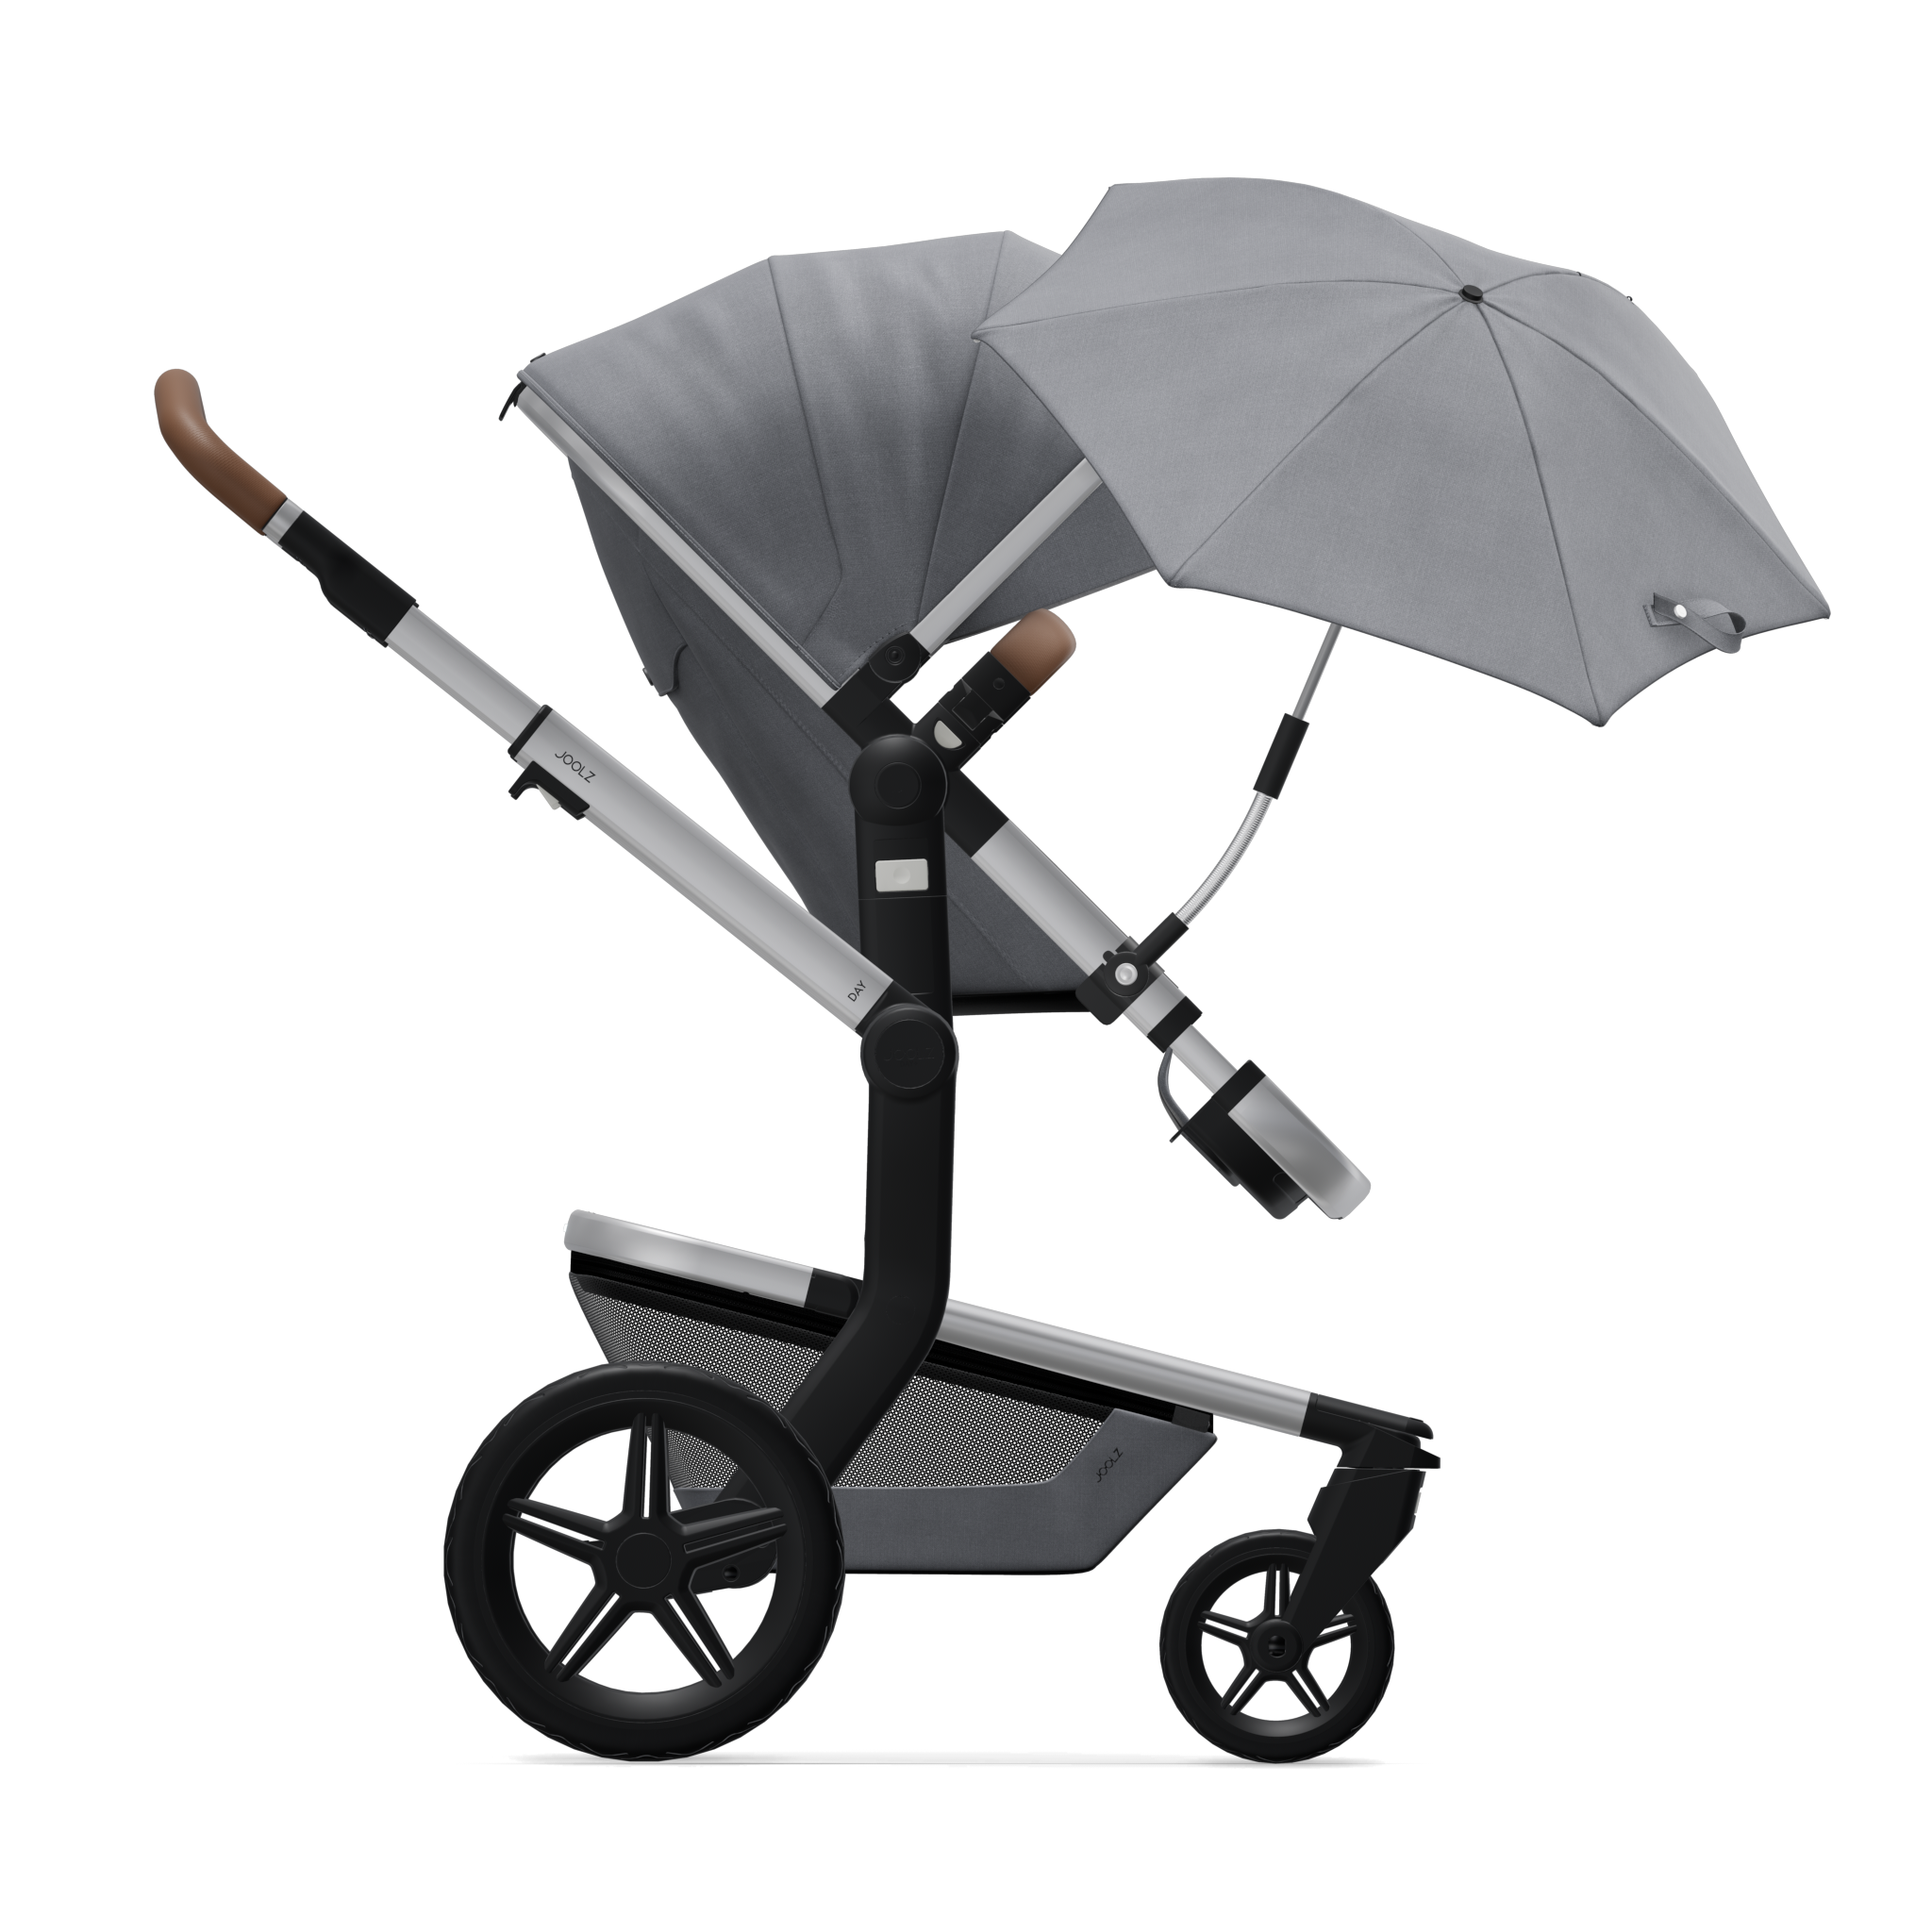 YIJU Baby Stroller Parasol Umbrella Adjustable with Umbrella Clip Fixing Device 360 Degree Sunshade for Bike Pram Trolley Wheelchair Buggy Black 